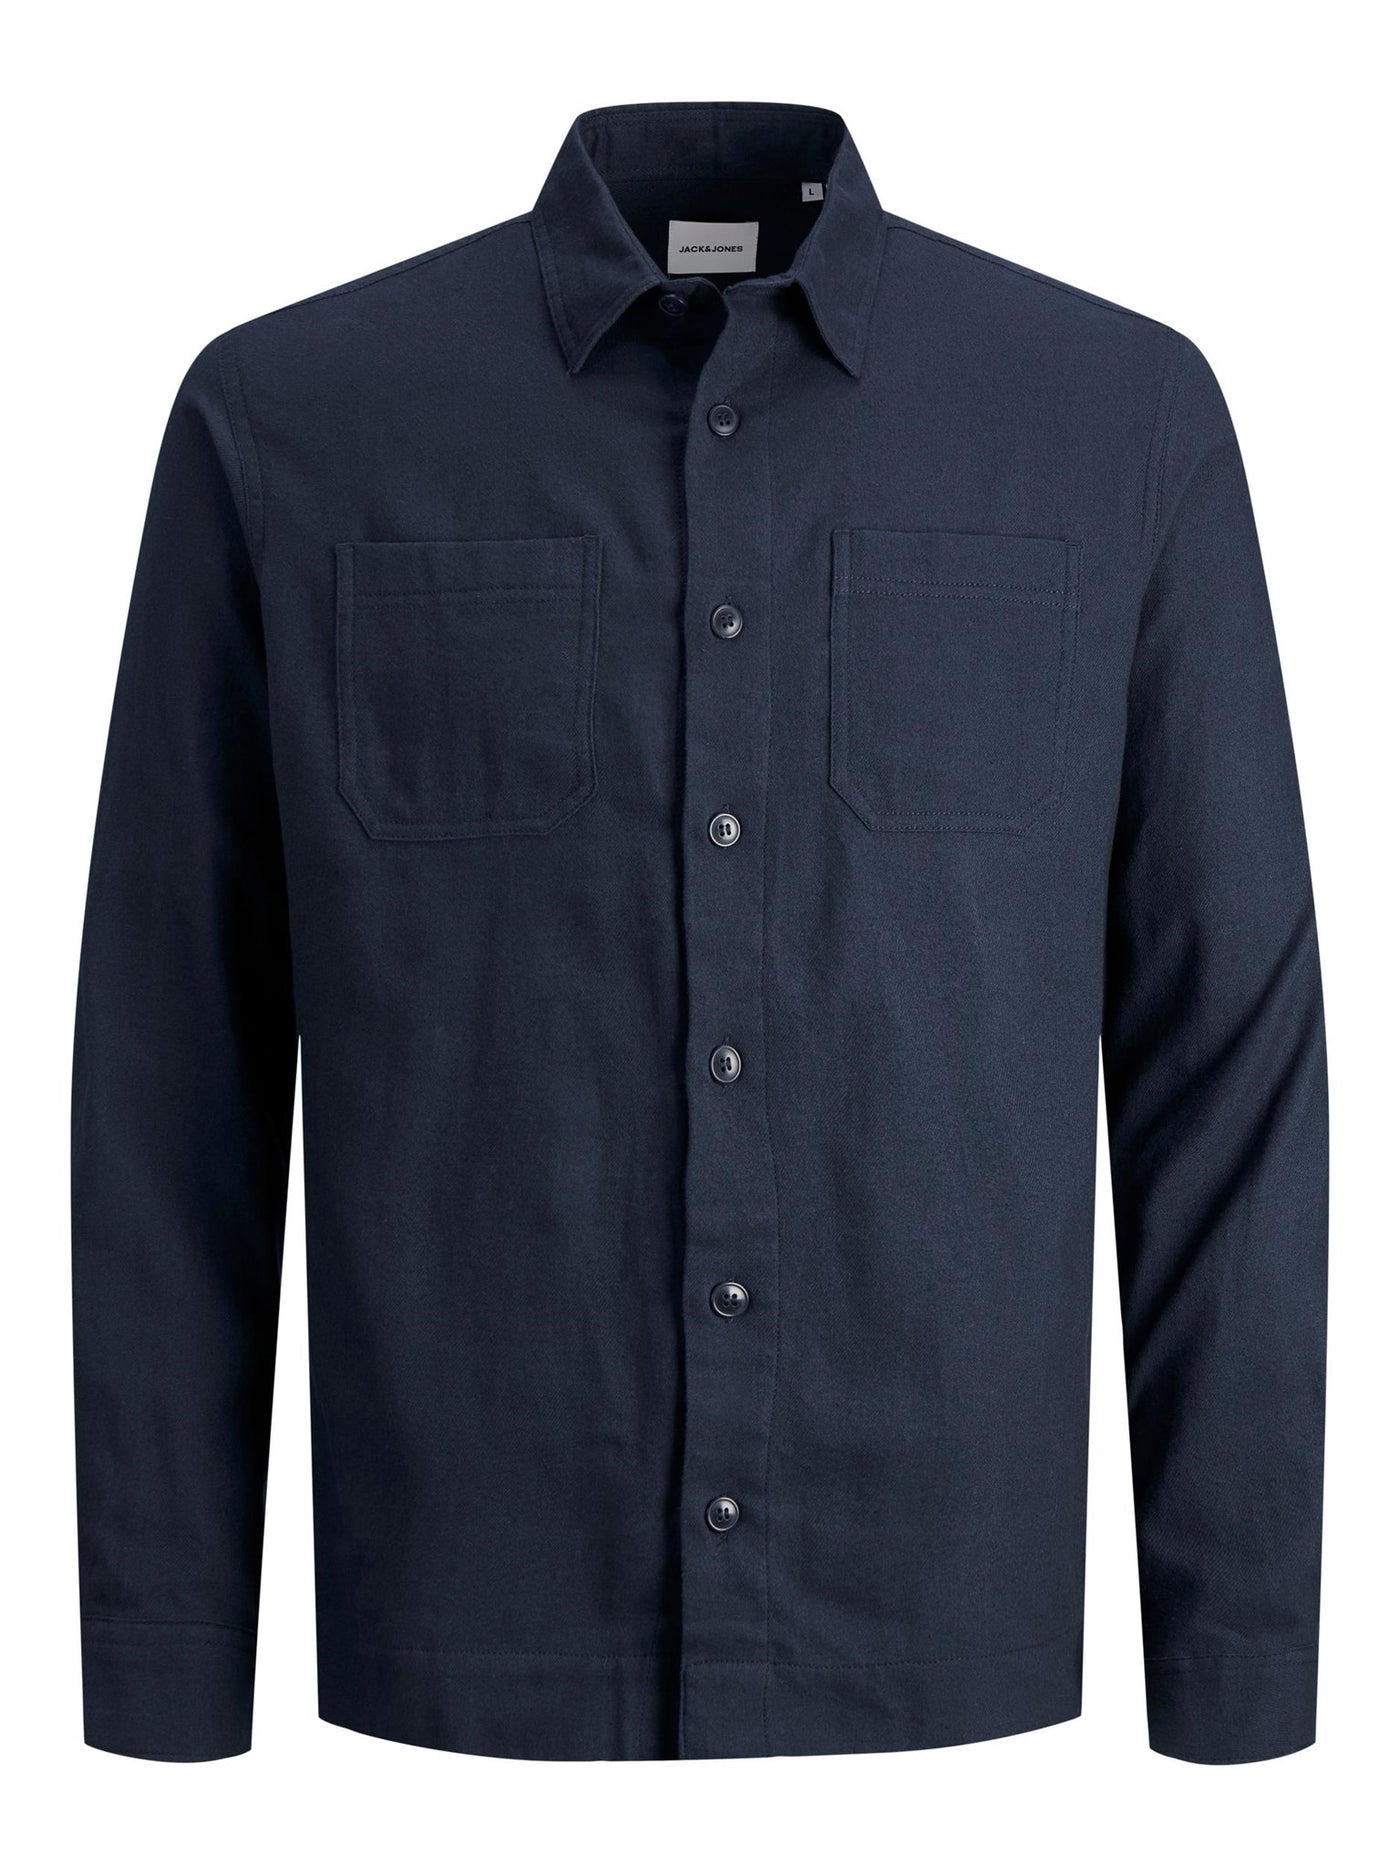 Logan Solid Skjorte - Navy Blazer - Jack & Jones - Blå